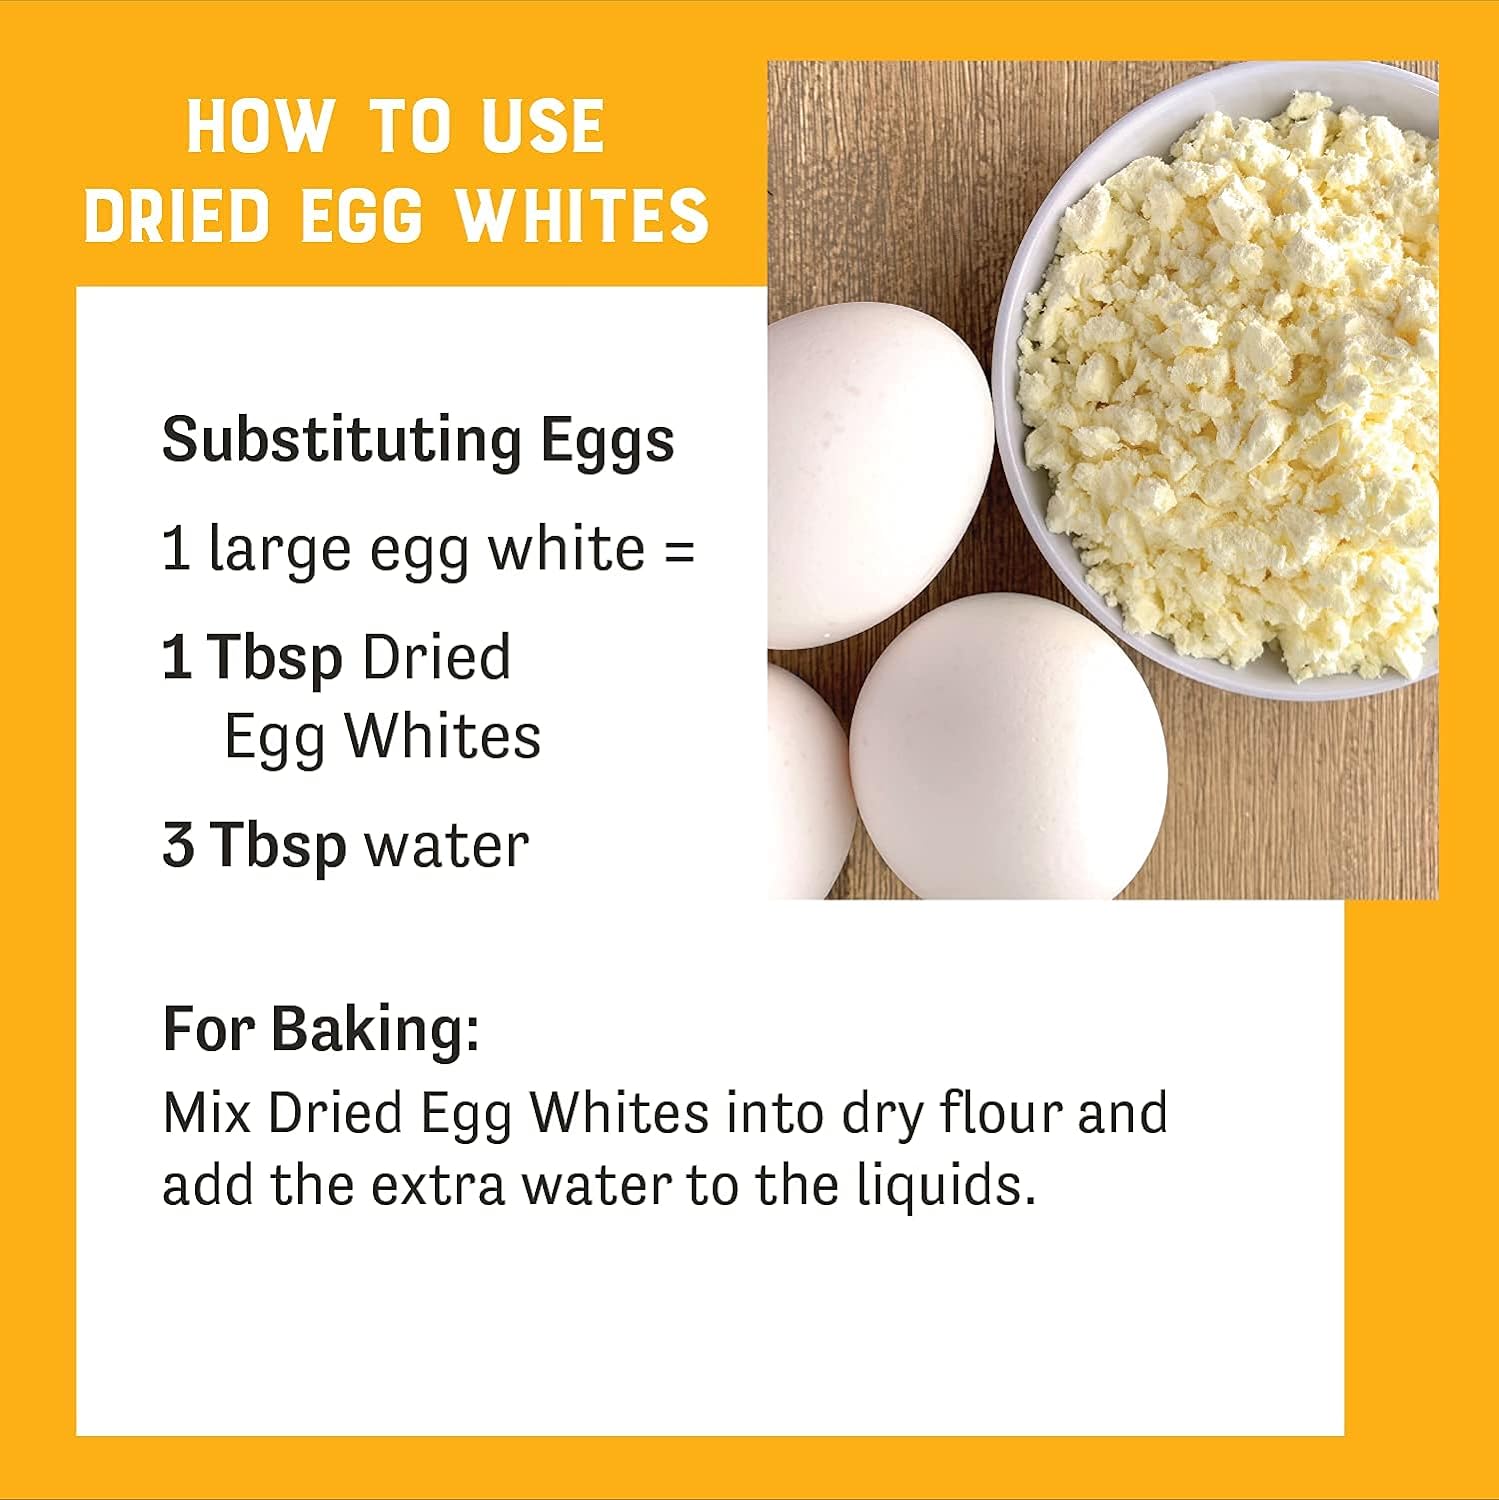 Judee's Small Egg Bundle: Whole Egg Powder 11 oz, Dried Egg White Protein 8 oz, Scrambled Egg Mix 11 oz